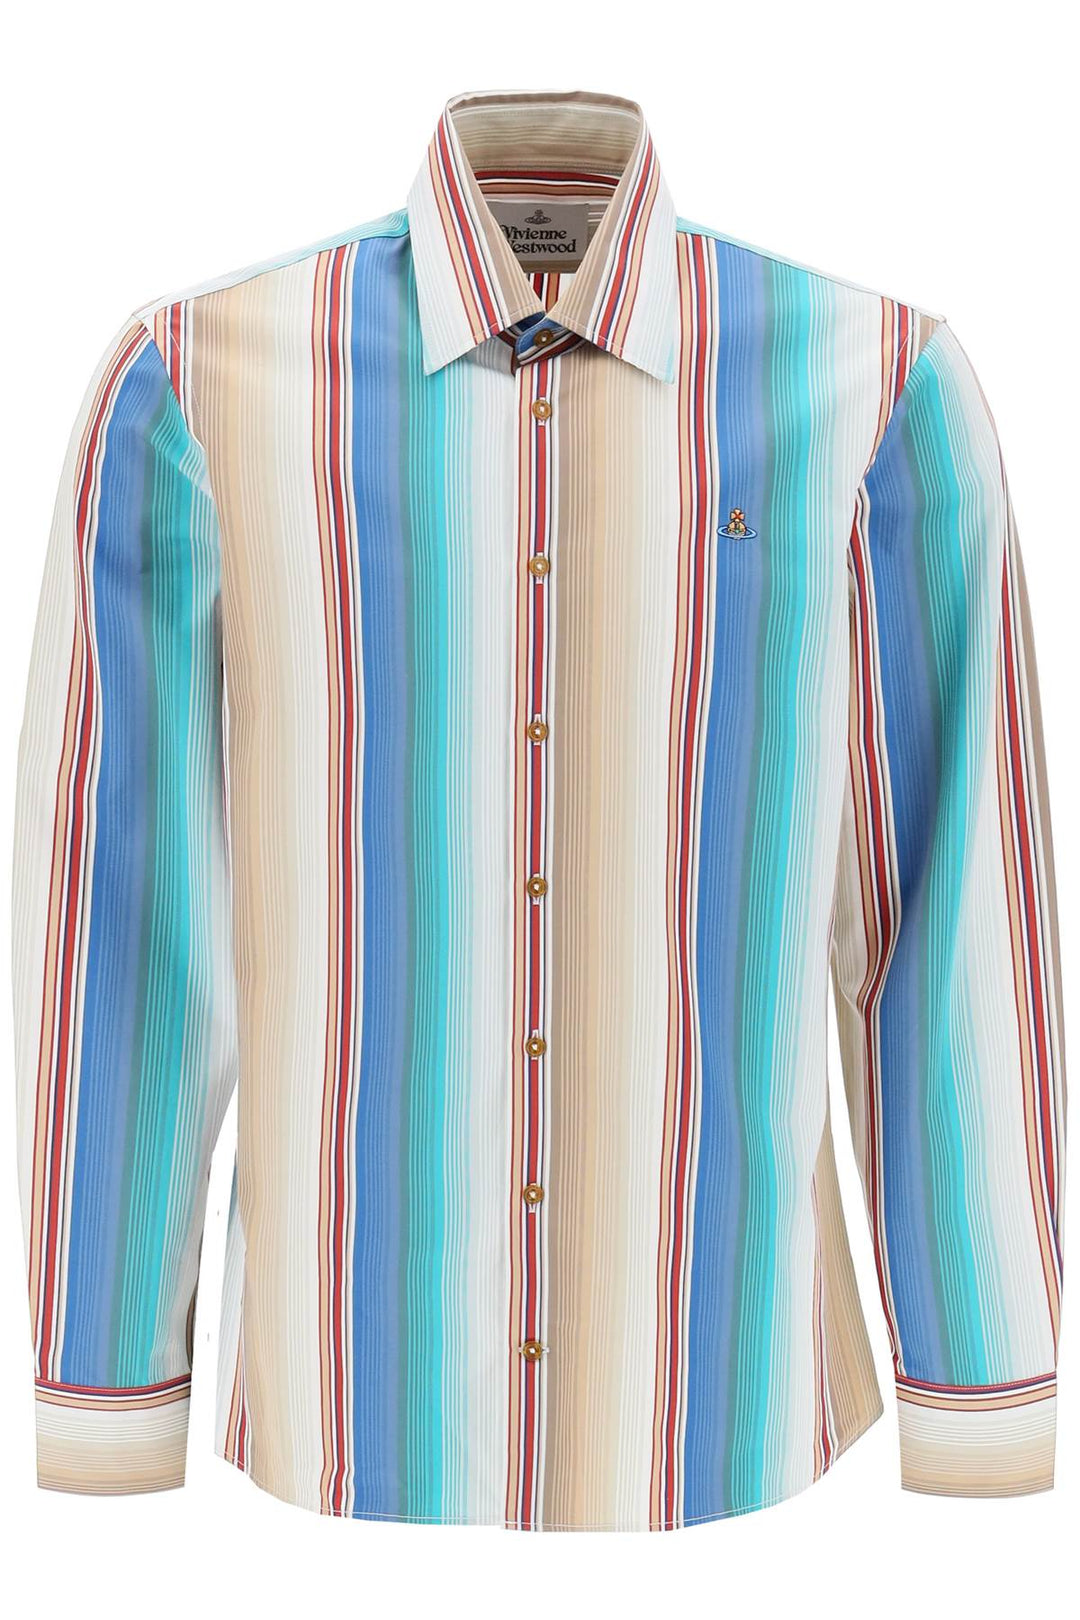 Vivienne westwood striped ghost shirt-0